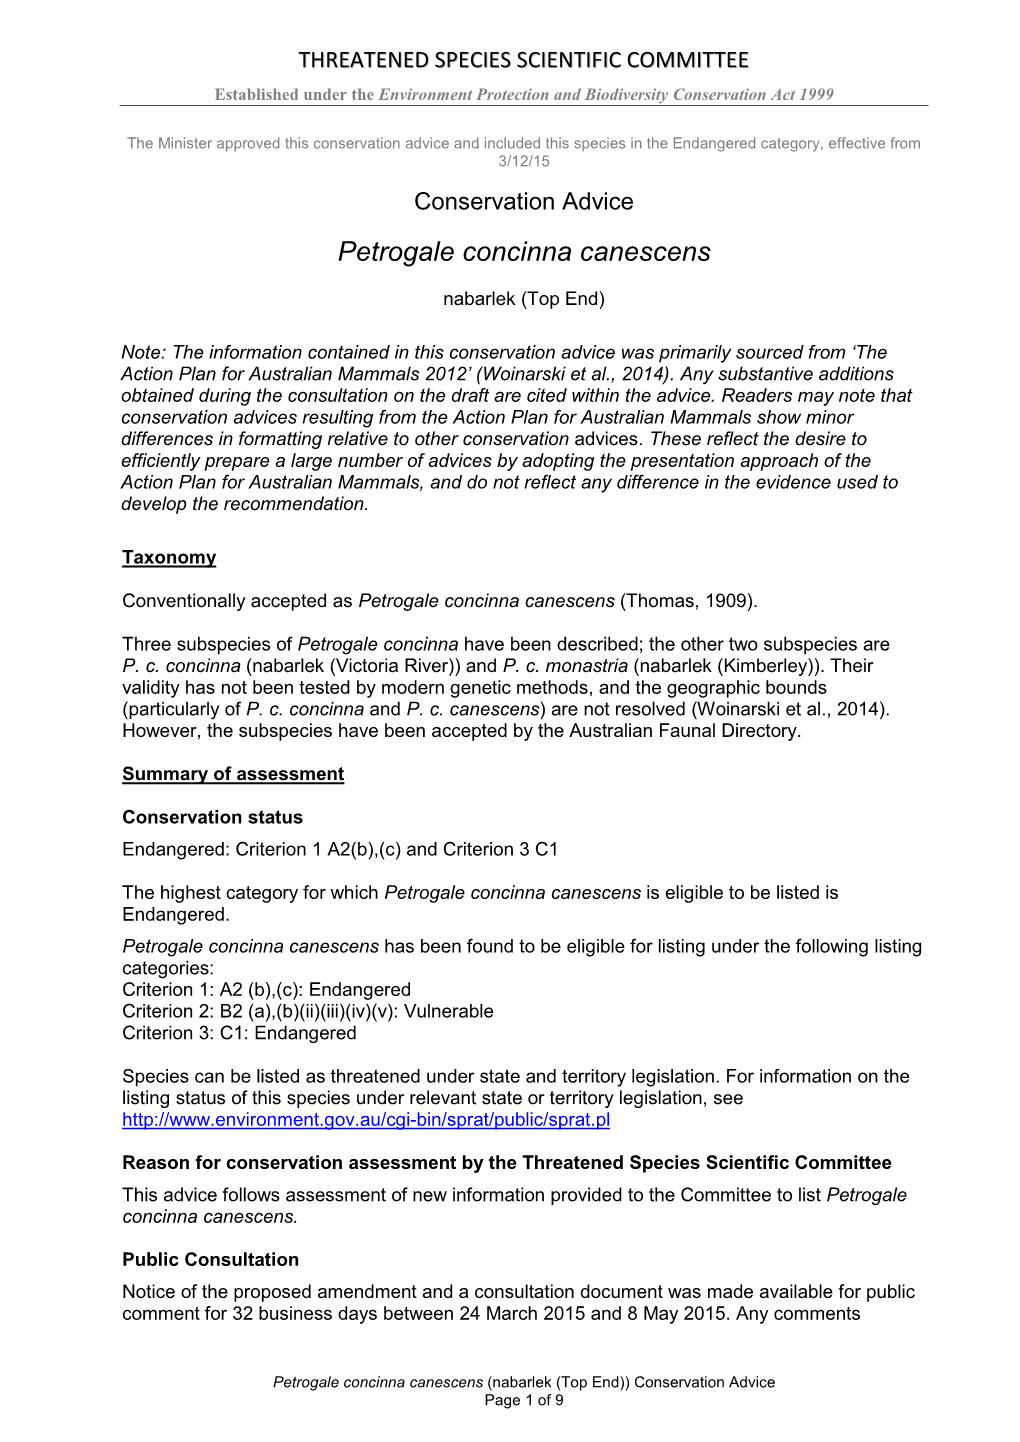 Conservation Advice Petrogale Concinna Canescens Nabarlek